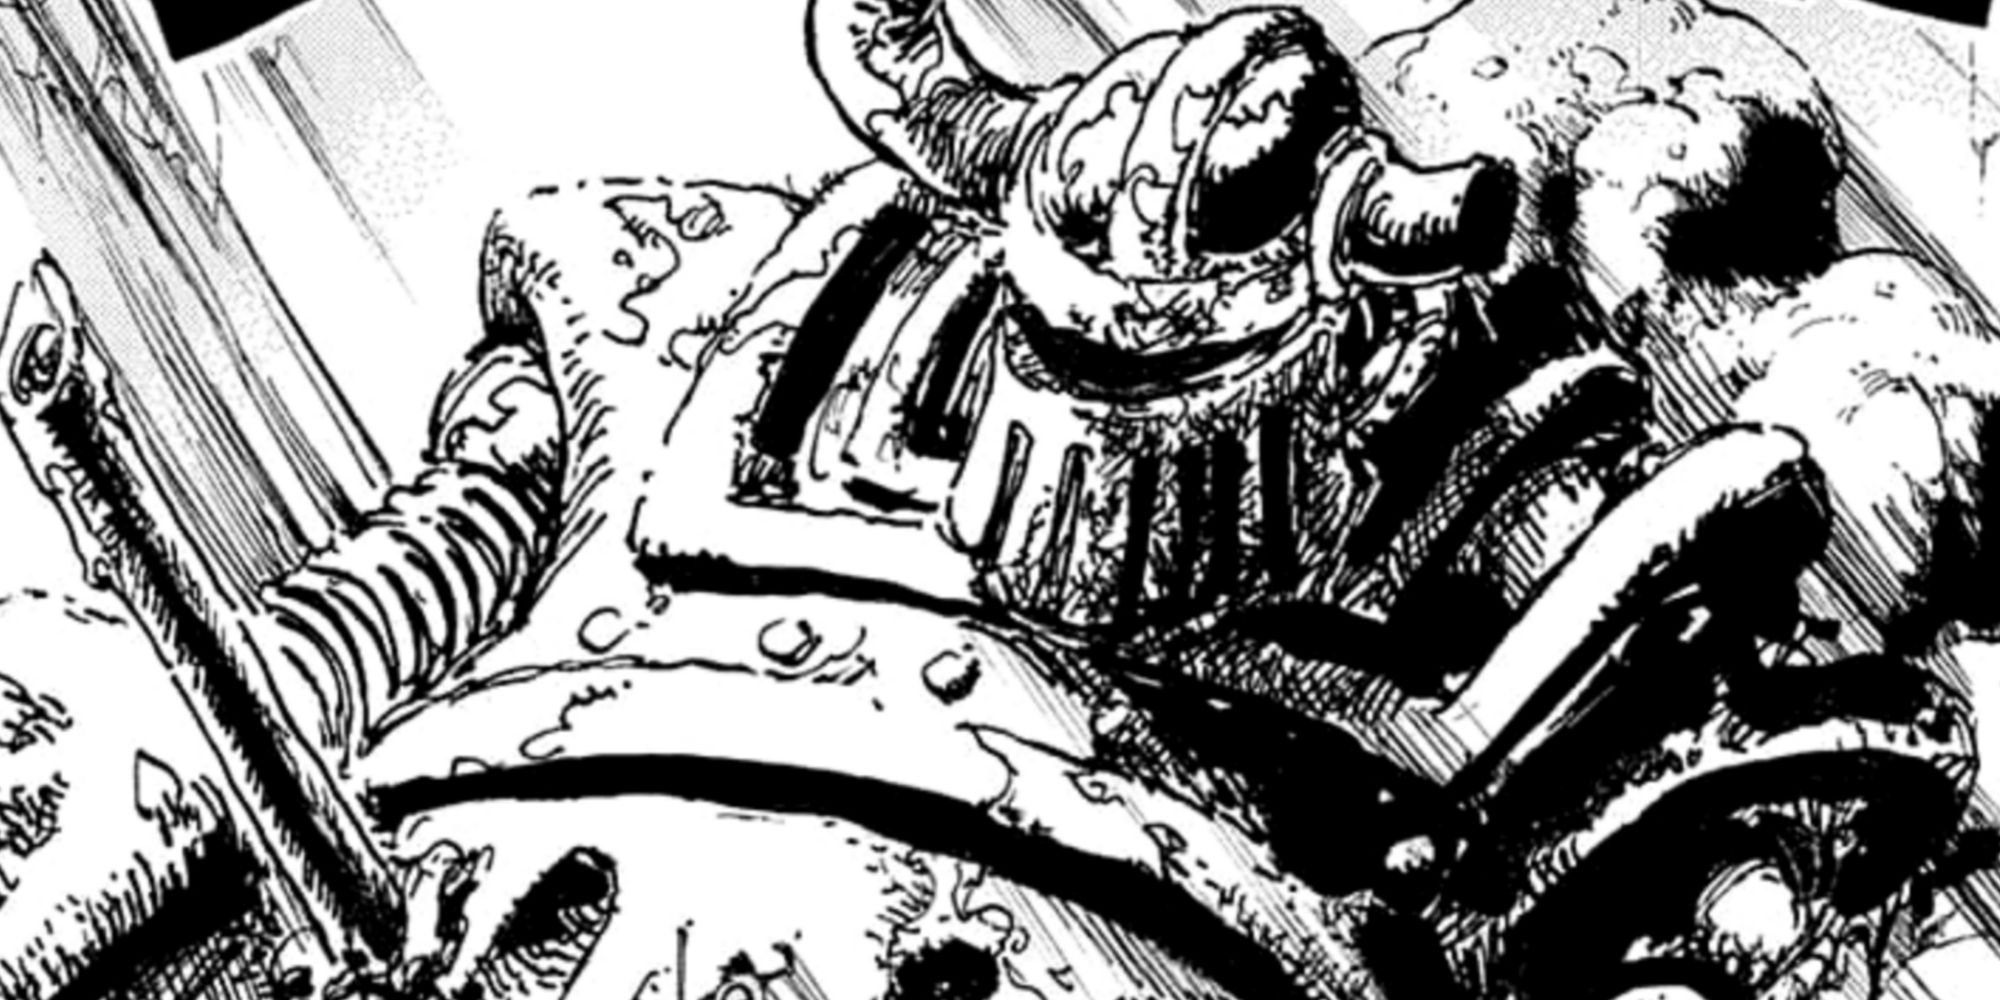 Iron Giant from One Piece manga